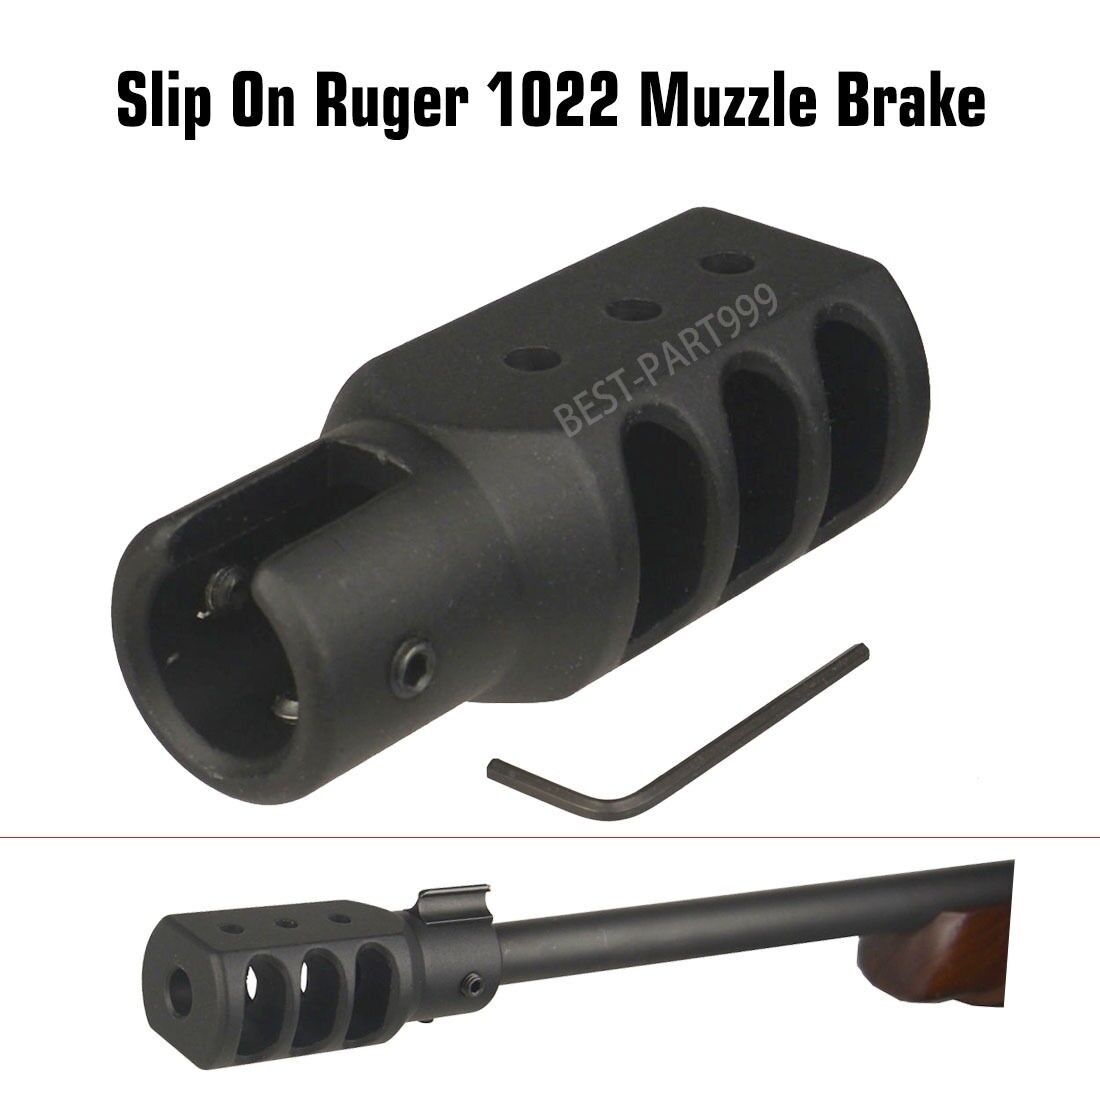 NEW Slip On Ruger 1022 10 22 Muzzle Brake Tanker Style 